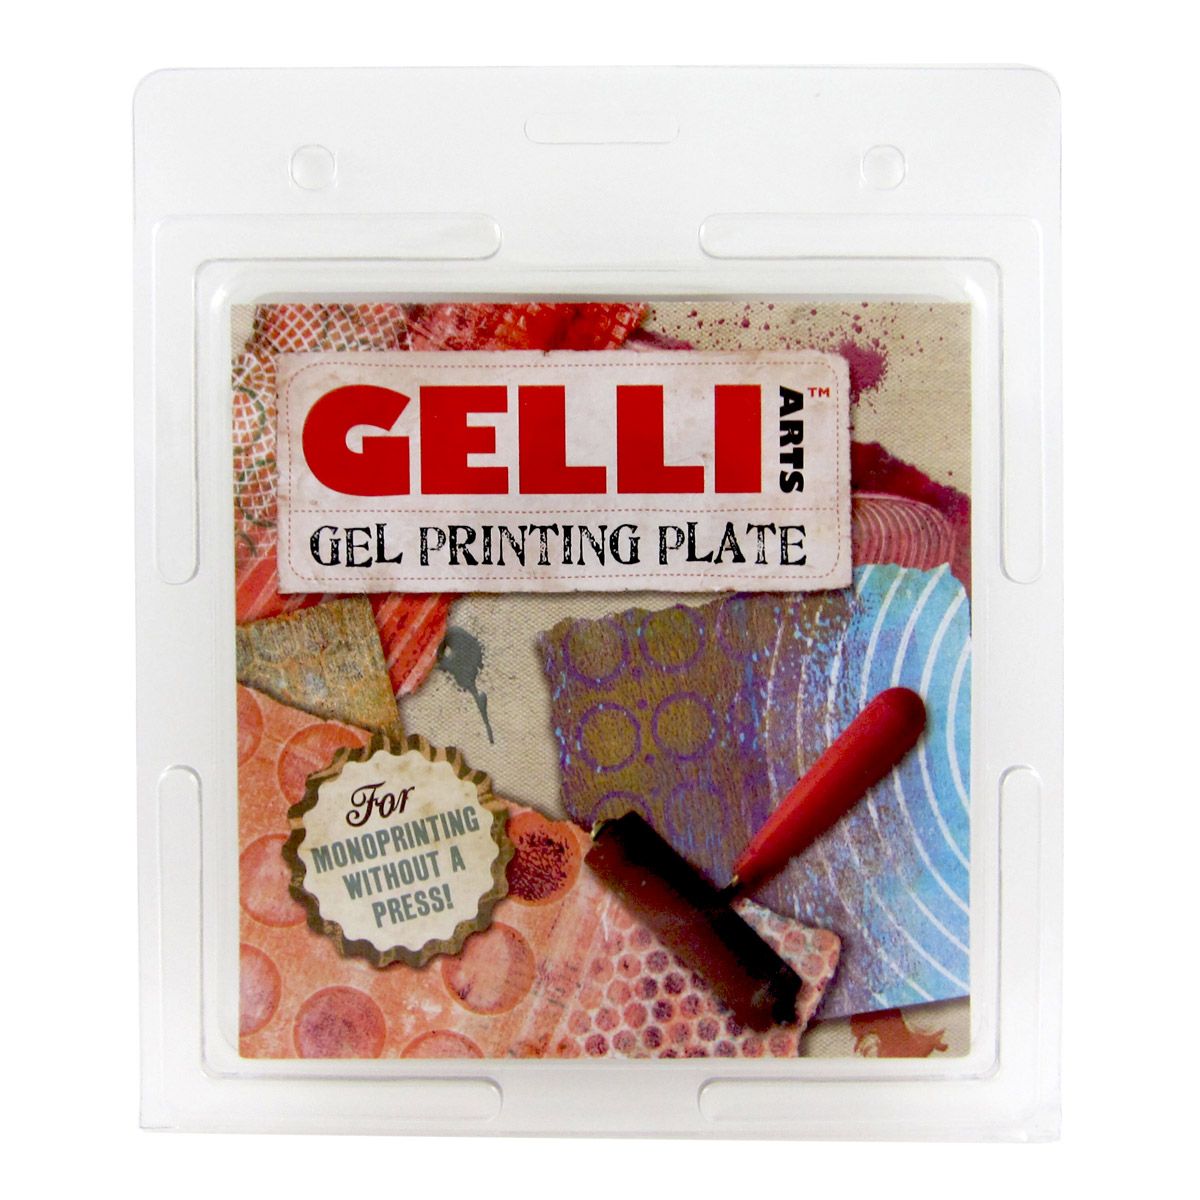 Gelli Printing Plate 6 x 6 Inches